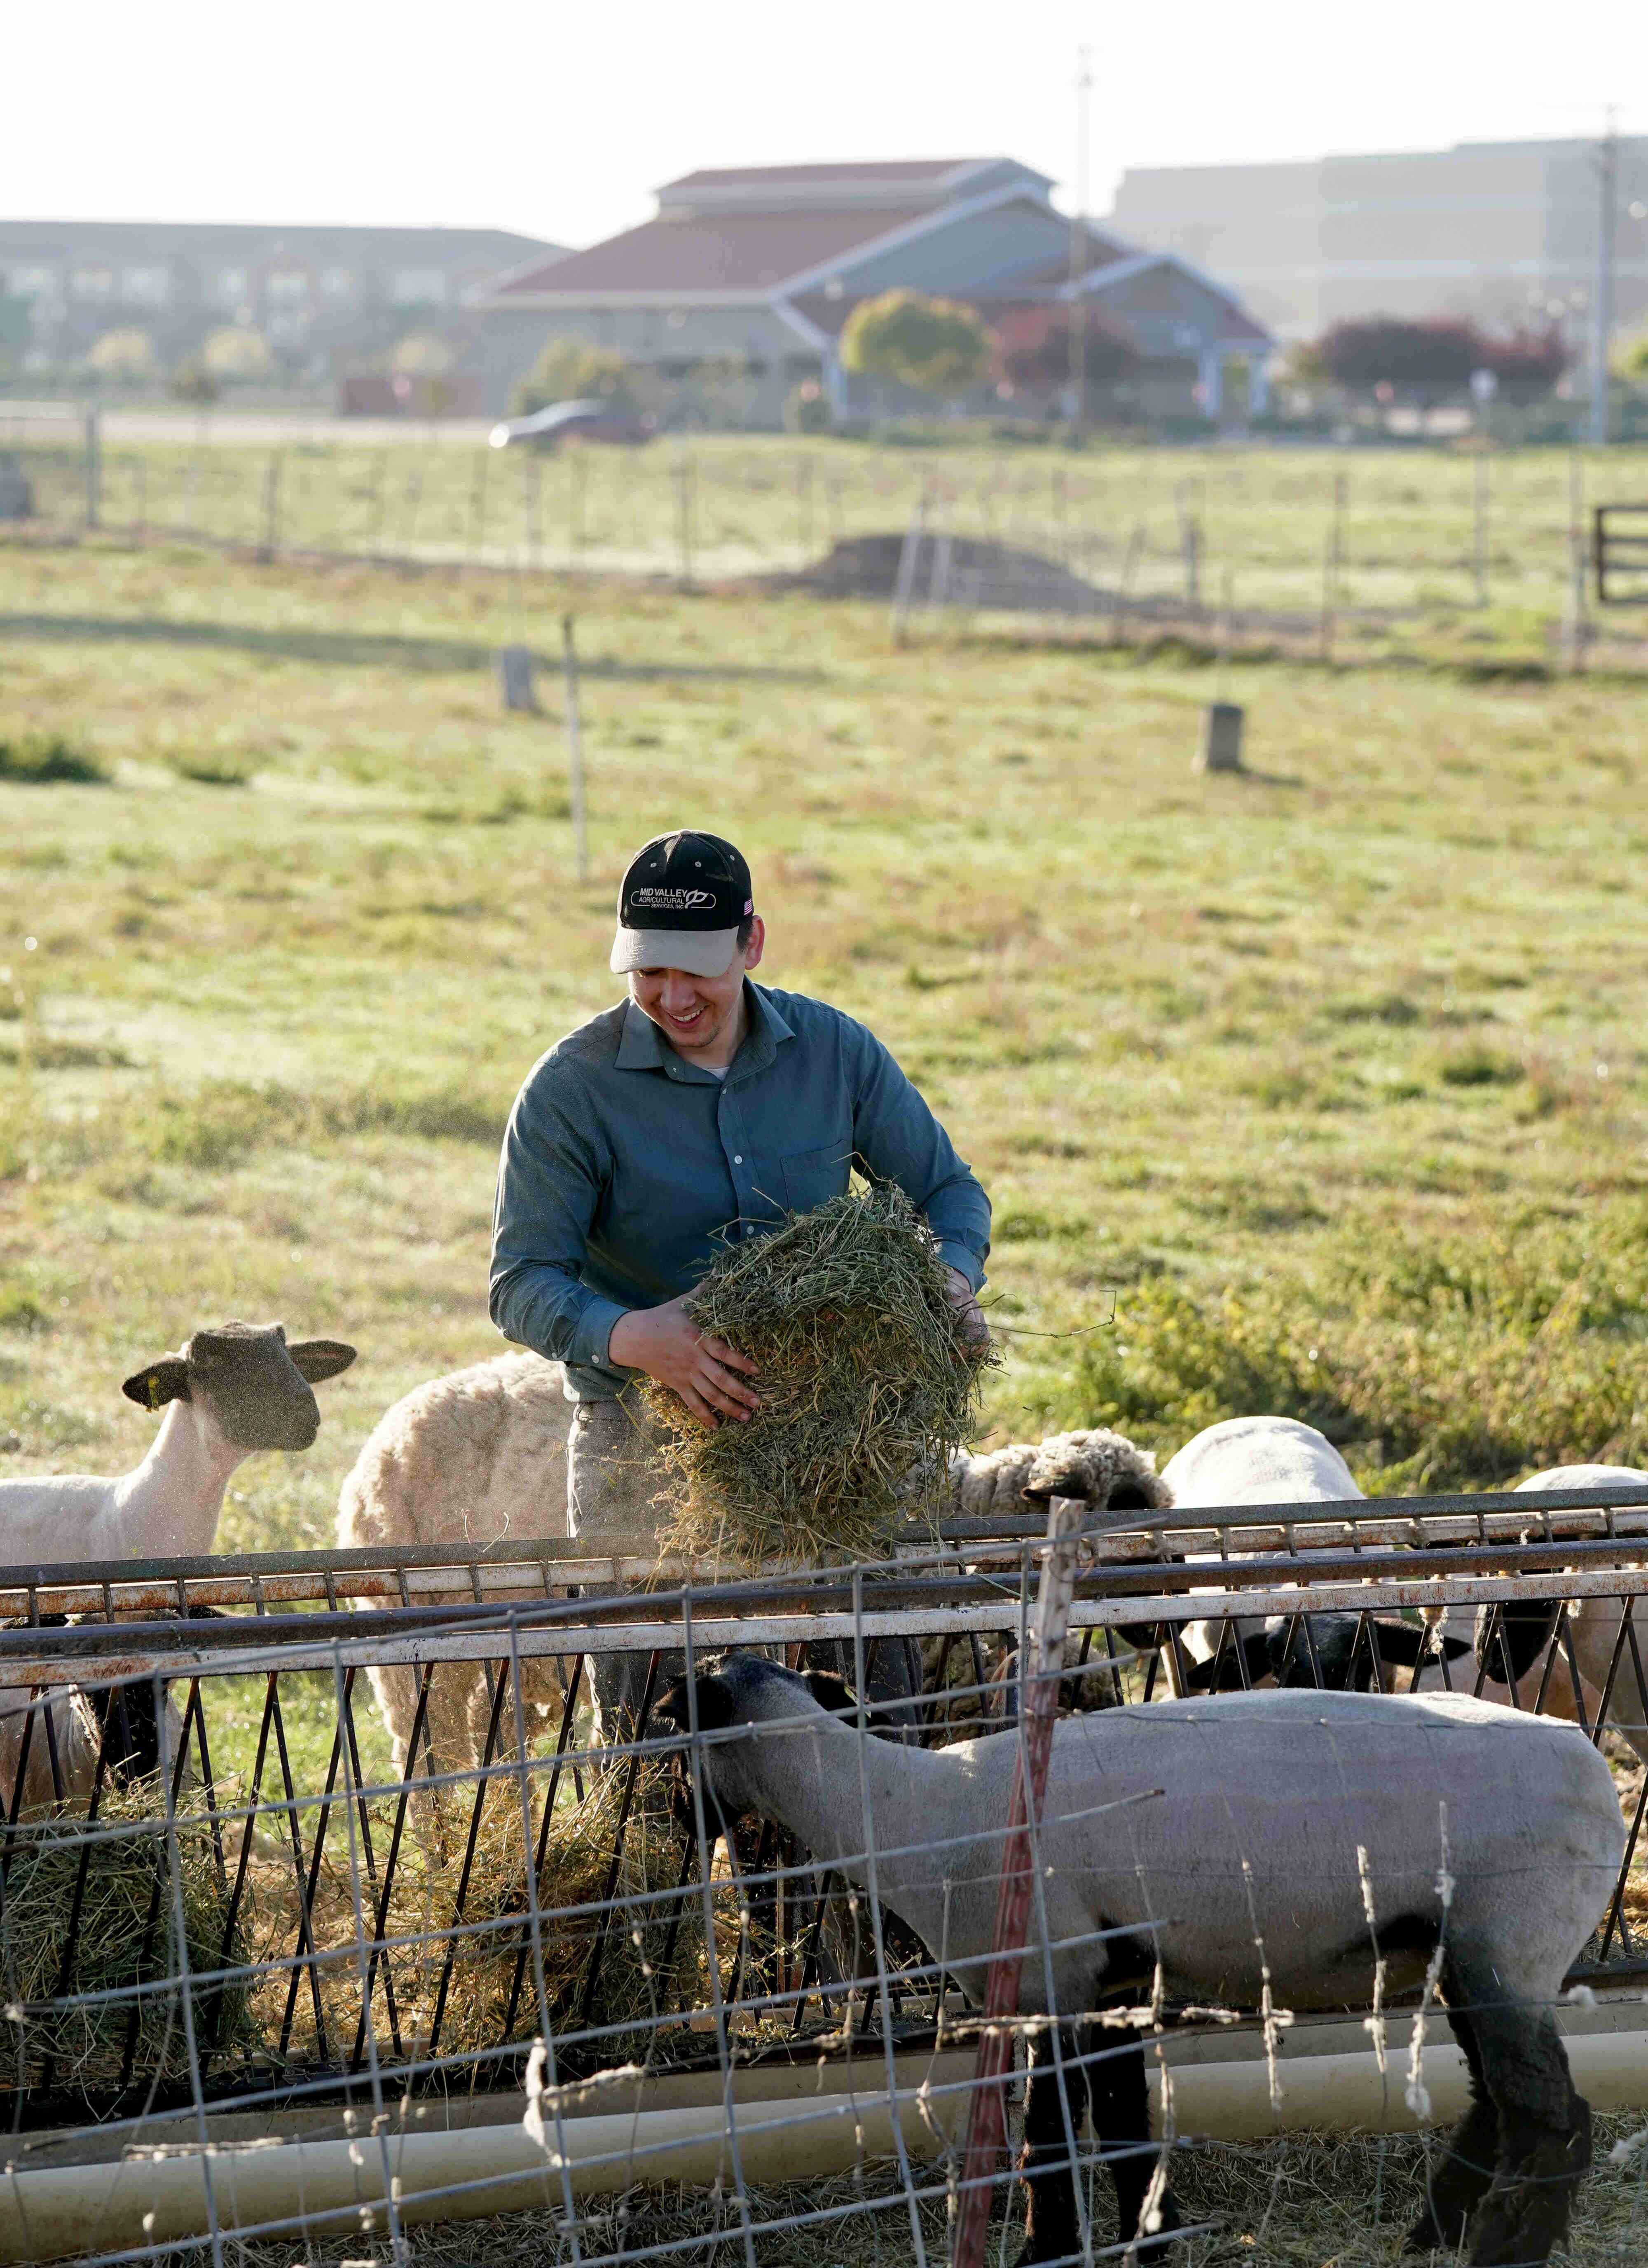 Student tending to sheep farm